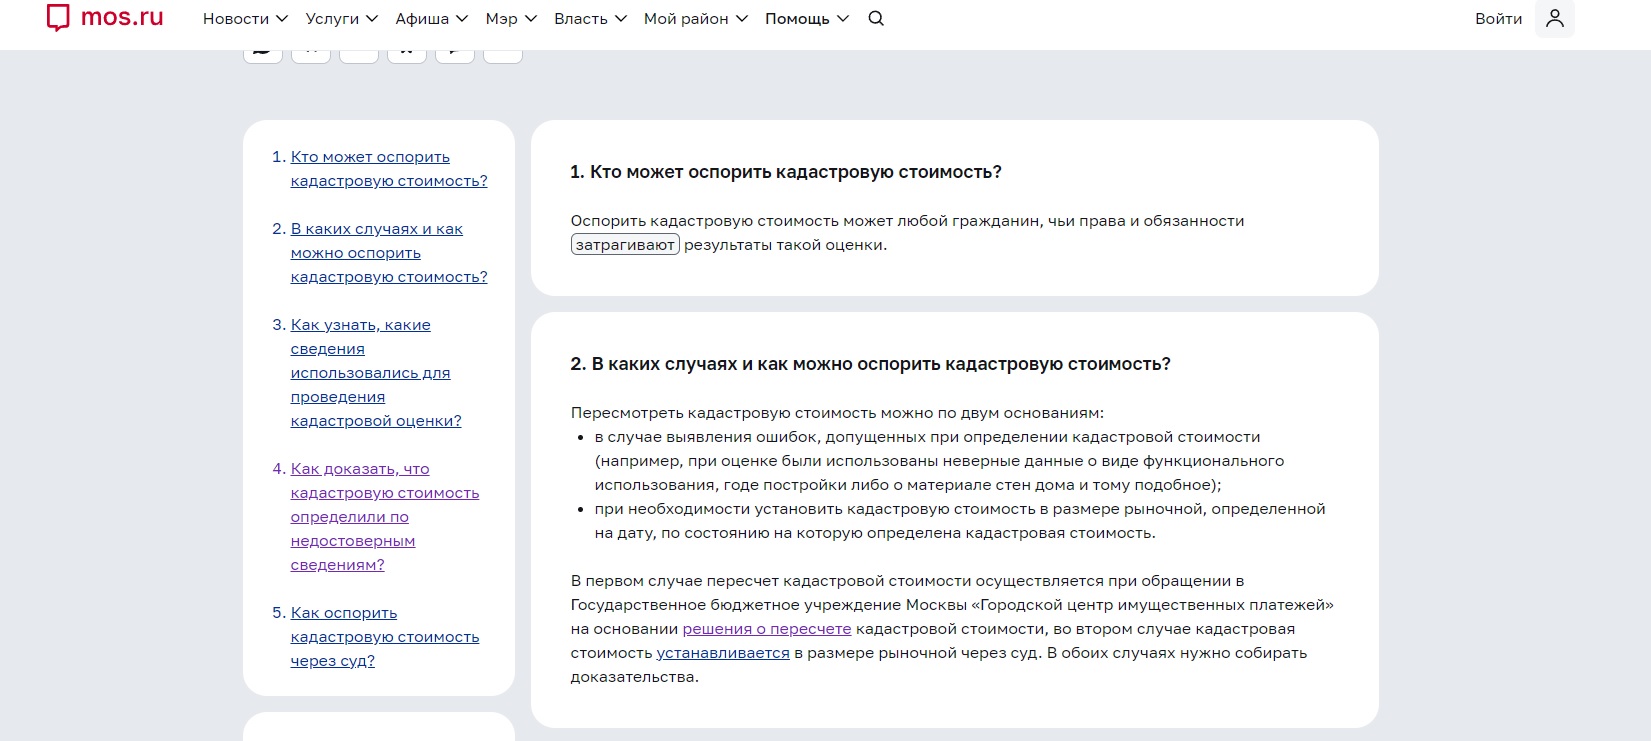 Разъяснения о вариантах оспаривания на портале Мэра Москвы